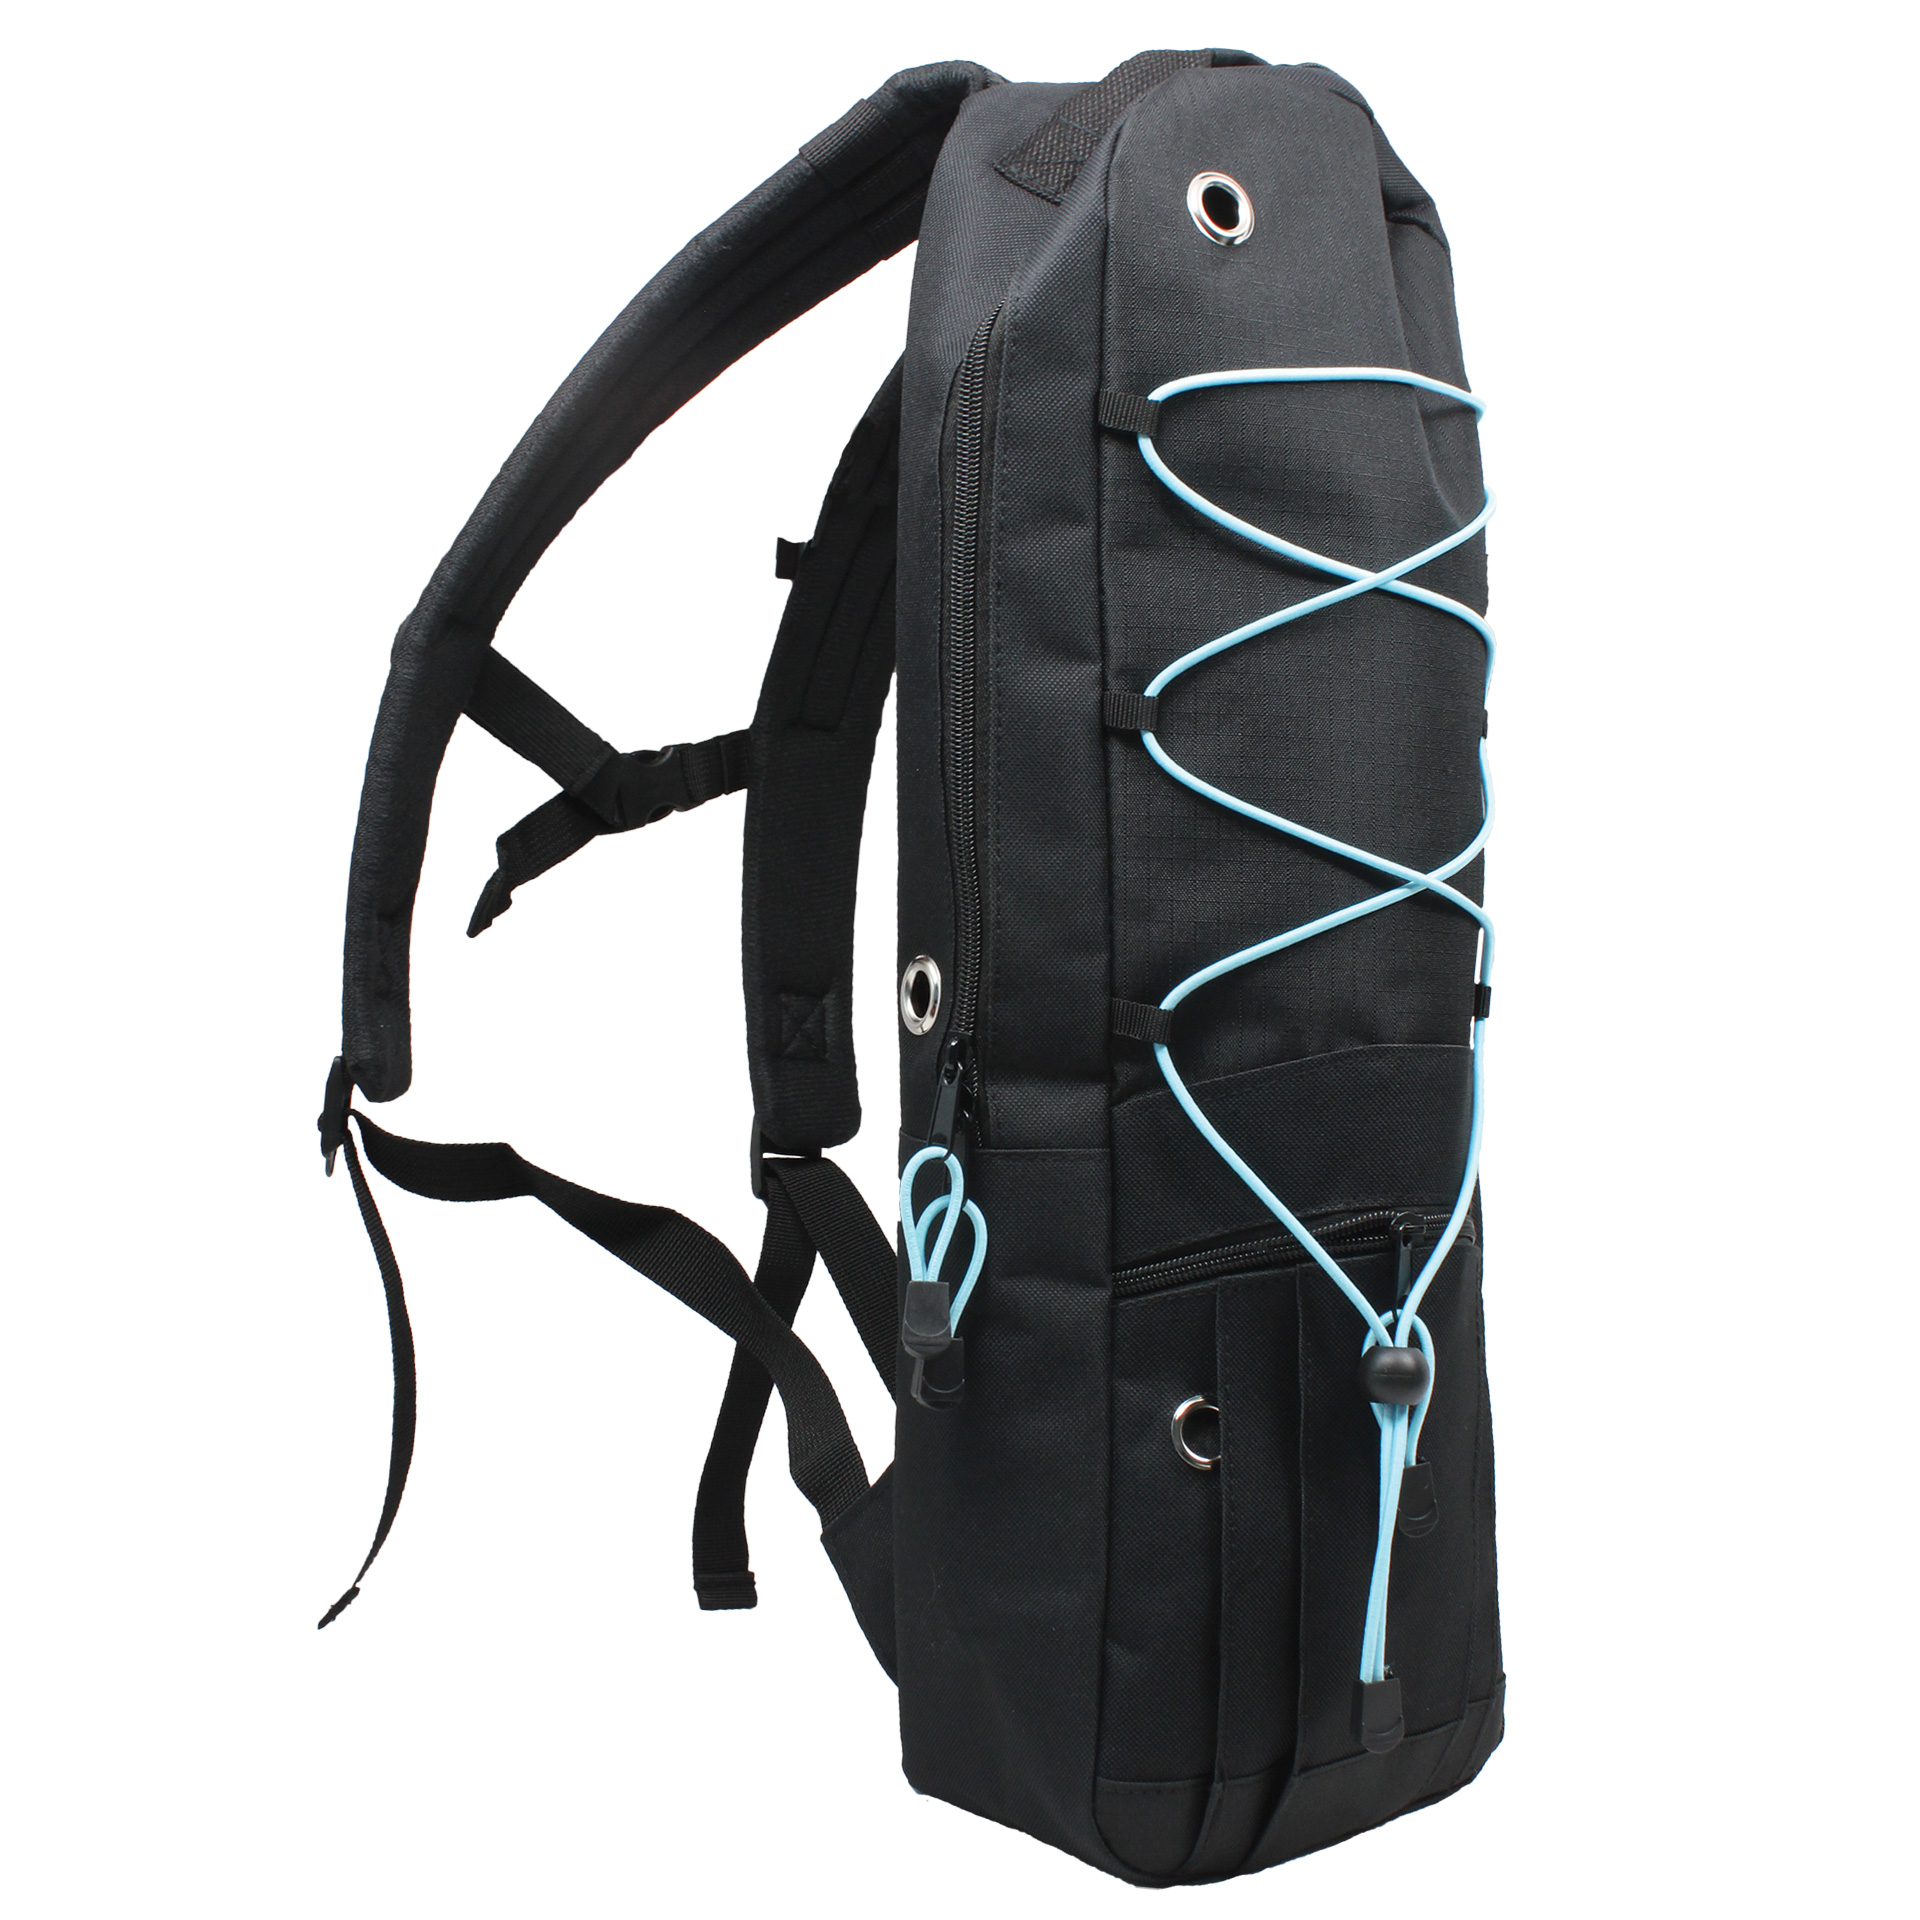 Carry bag for Sunset Nebulizer - SecondwindCPAP